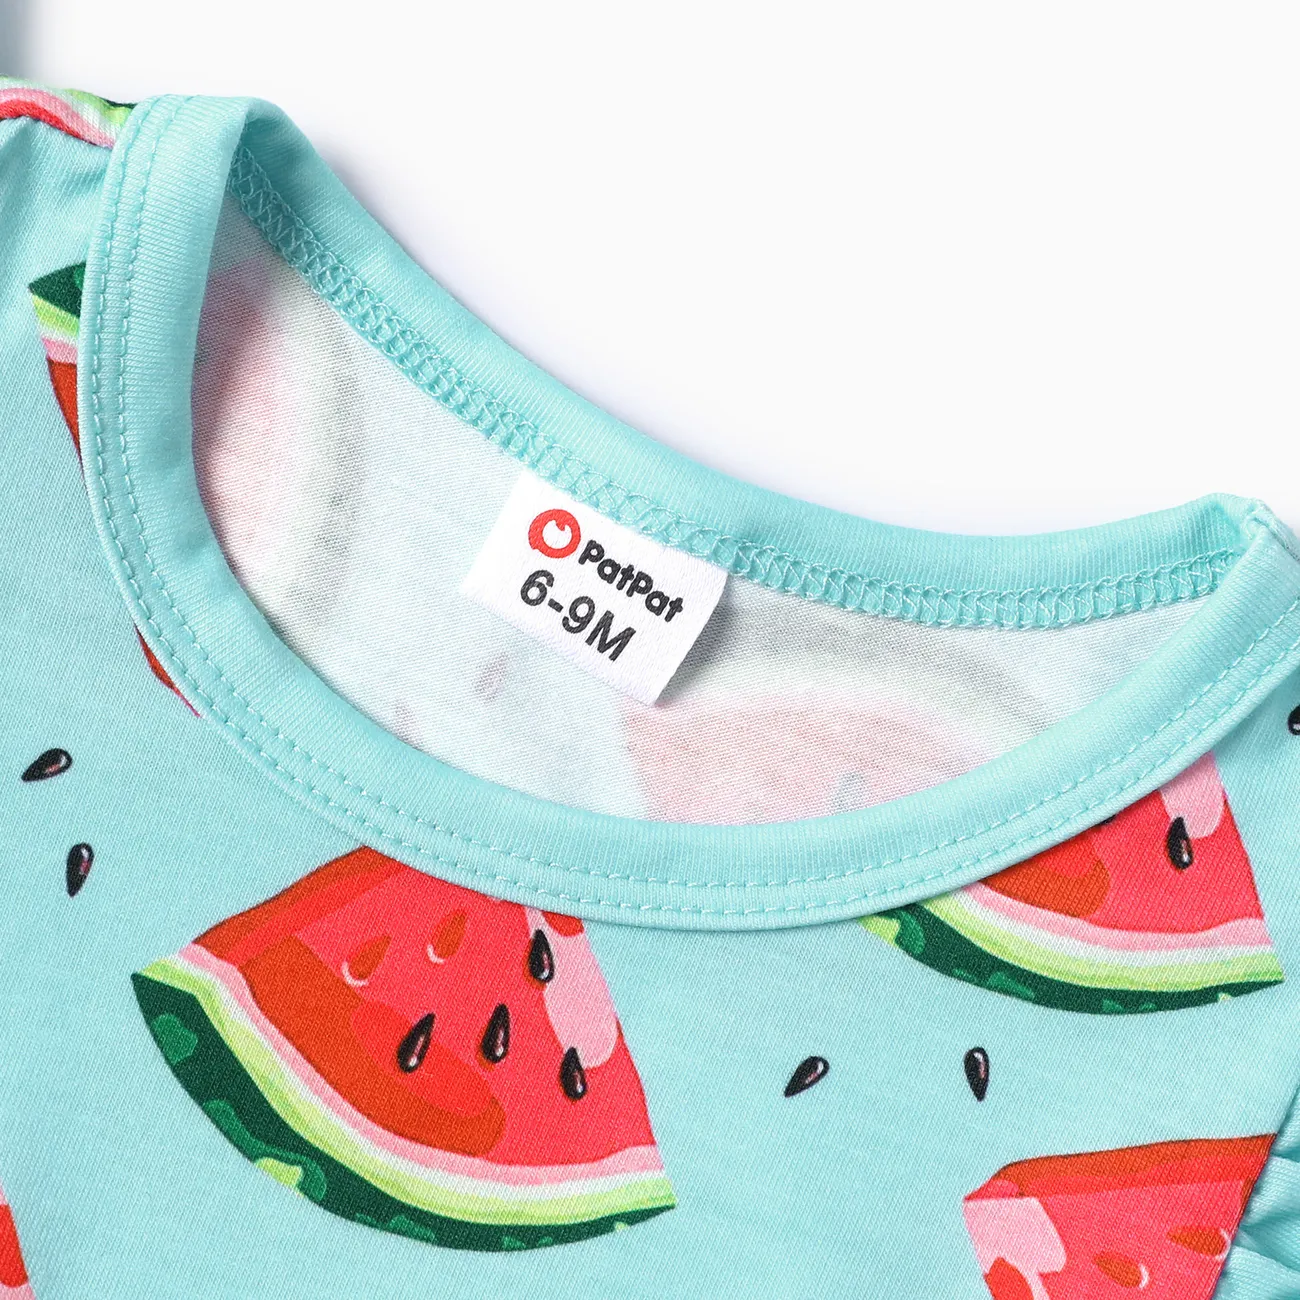 2pcs Baby Girls Cute Watermelon Ruffle  Cool Summer Romper   Mint Green big image 1